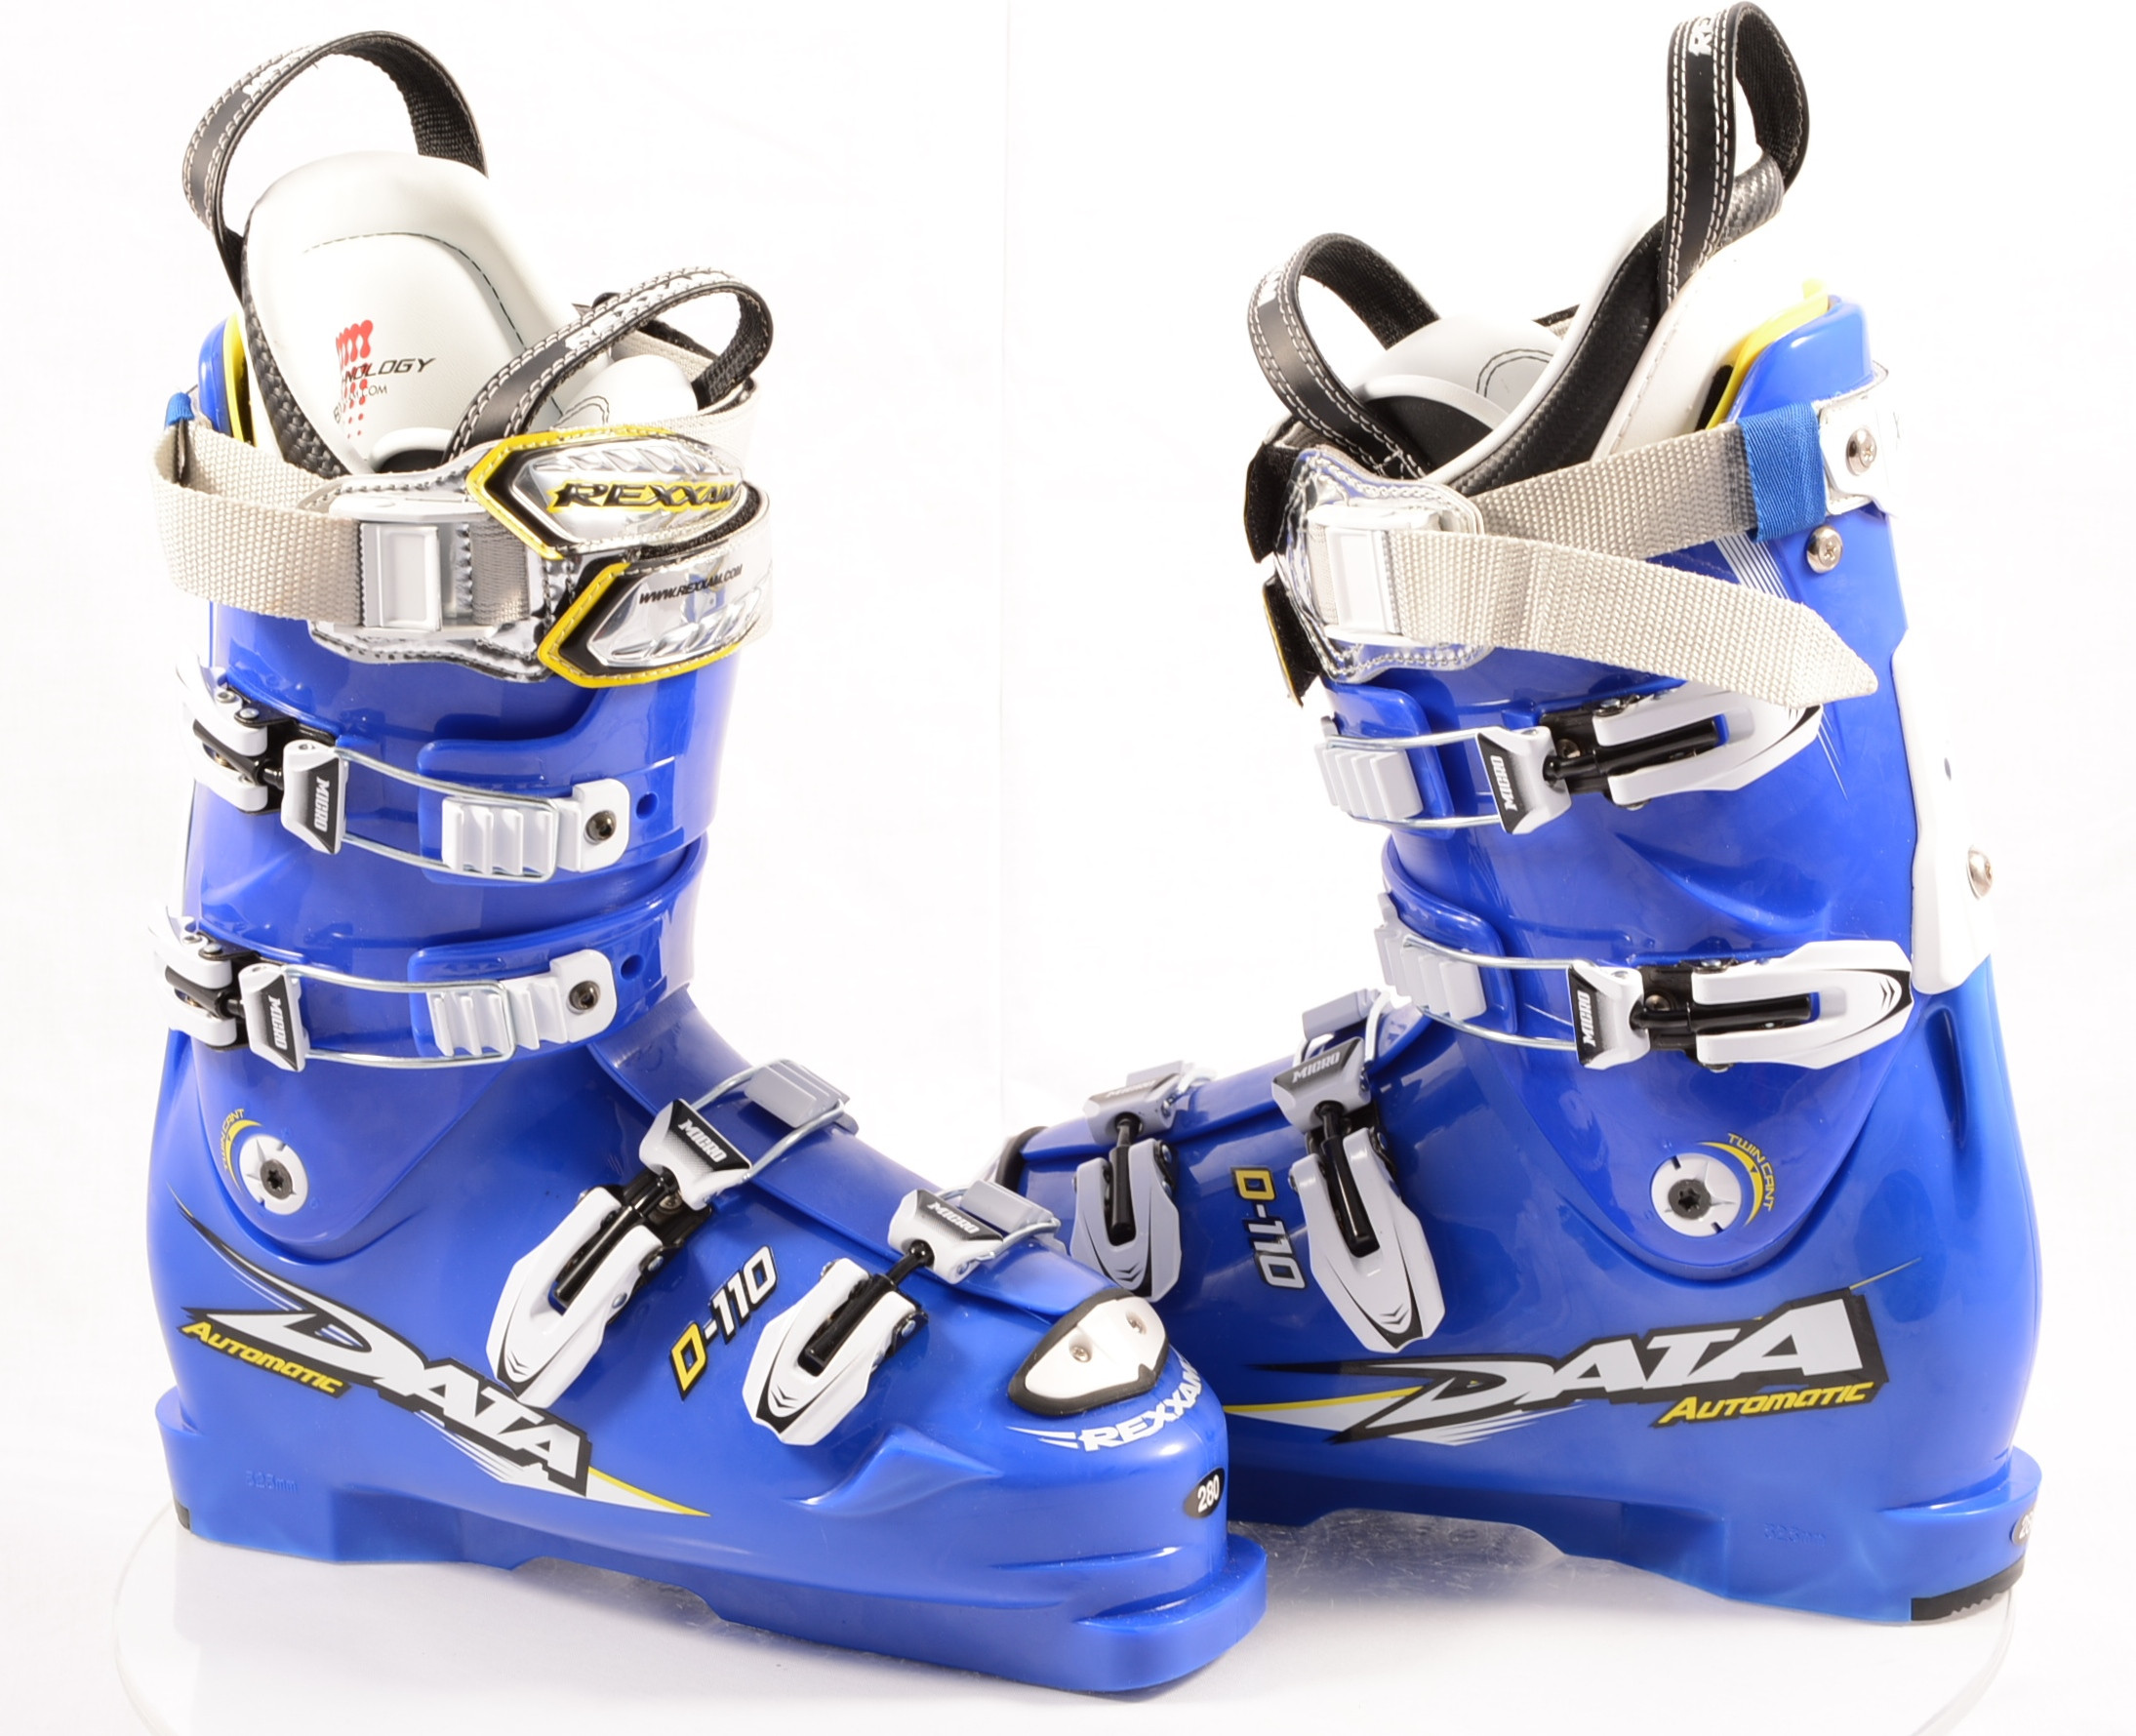 new ski boots REXXAM DATA D-110 